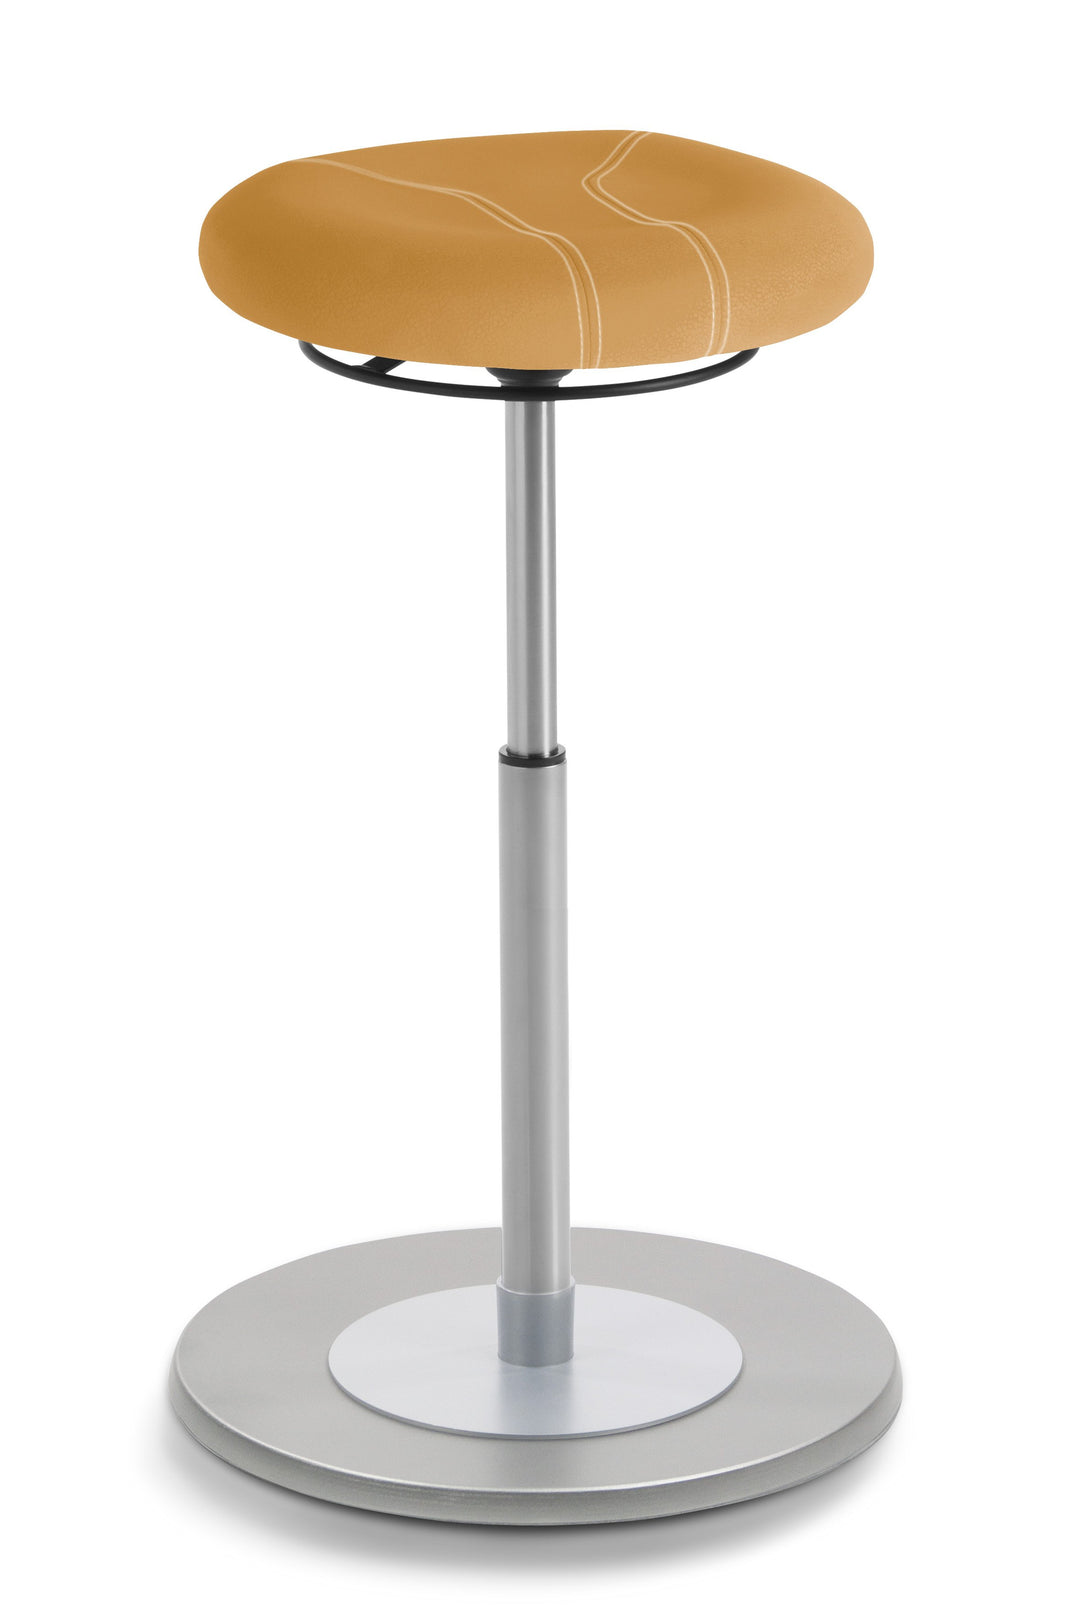 Mayer MyErgosit Taboret Krzesło Stołek balansujący płaski 54-79cm podstawa srebrna 1110 EF